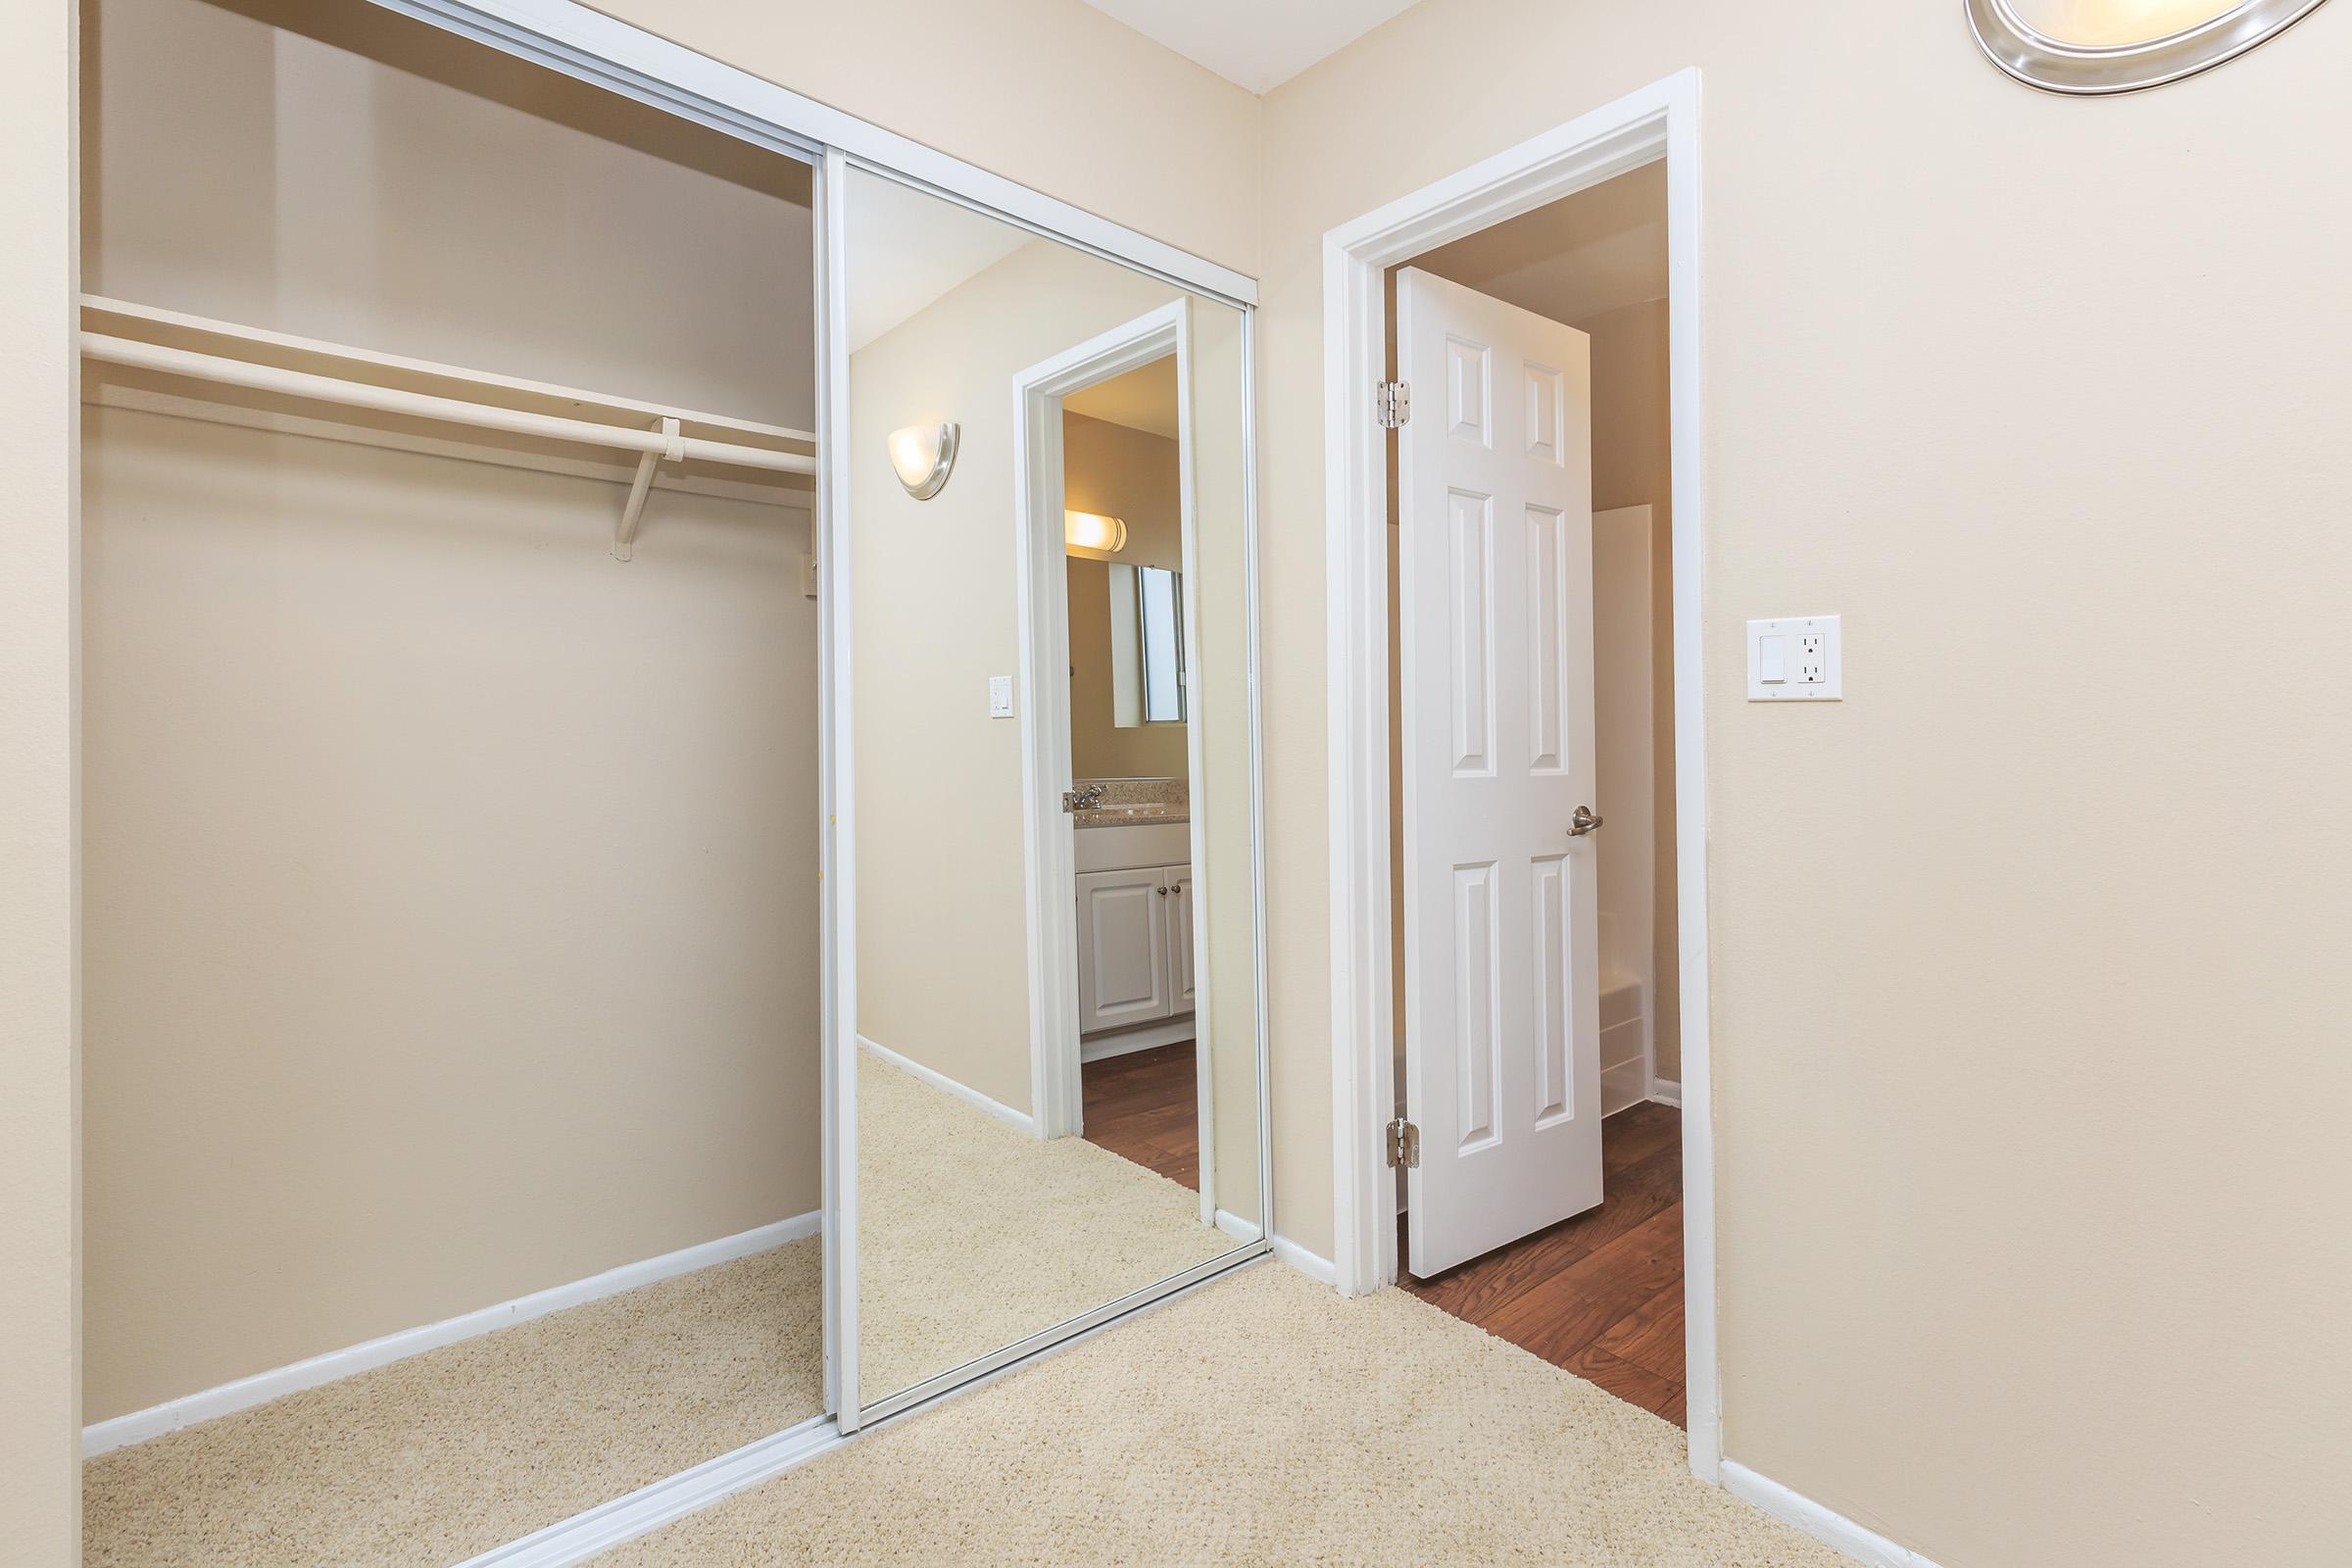 Open sliding mirror glass doors to closet